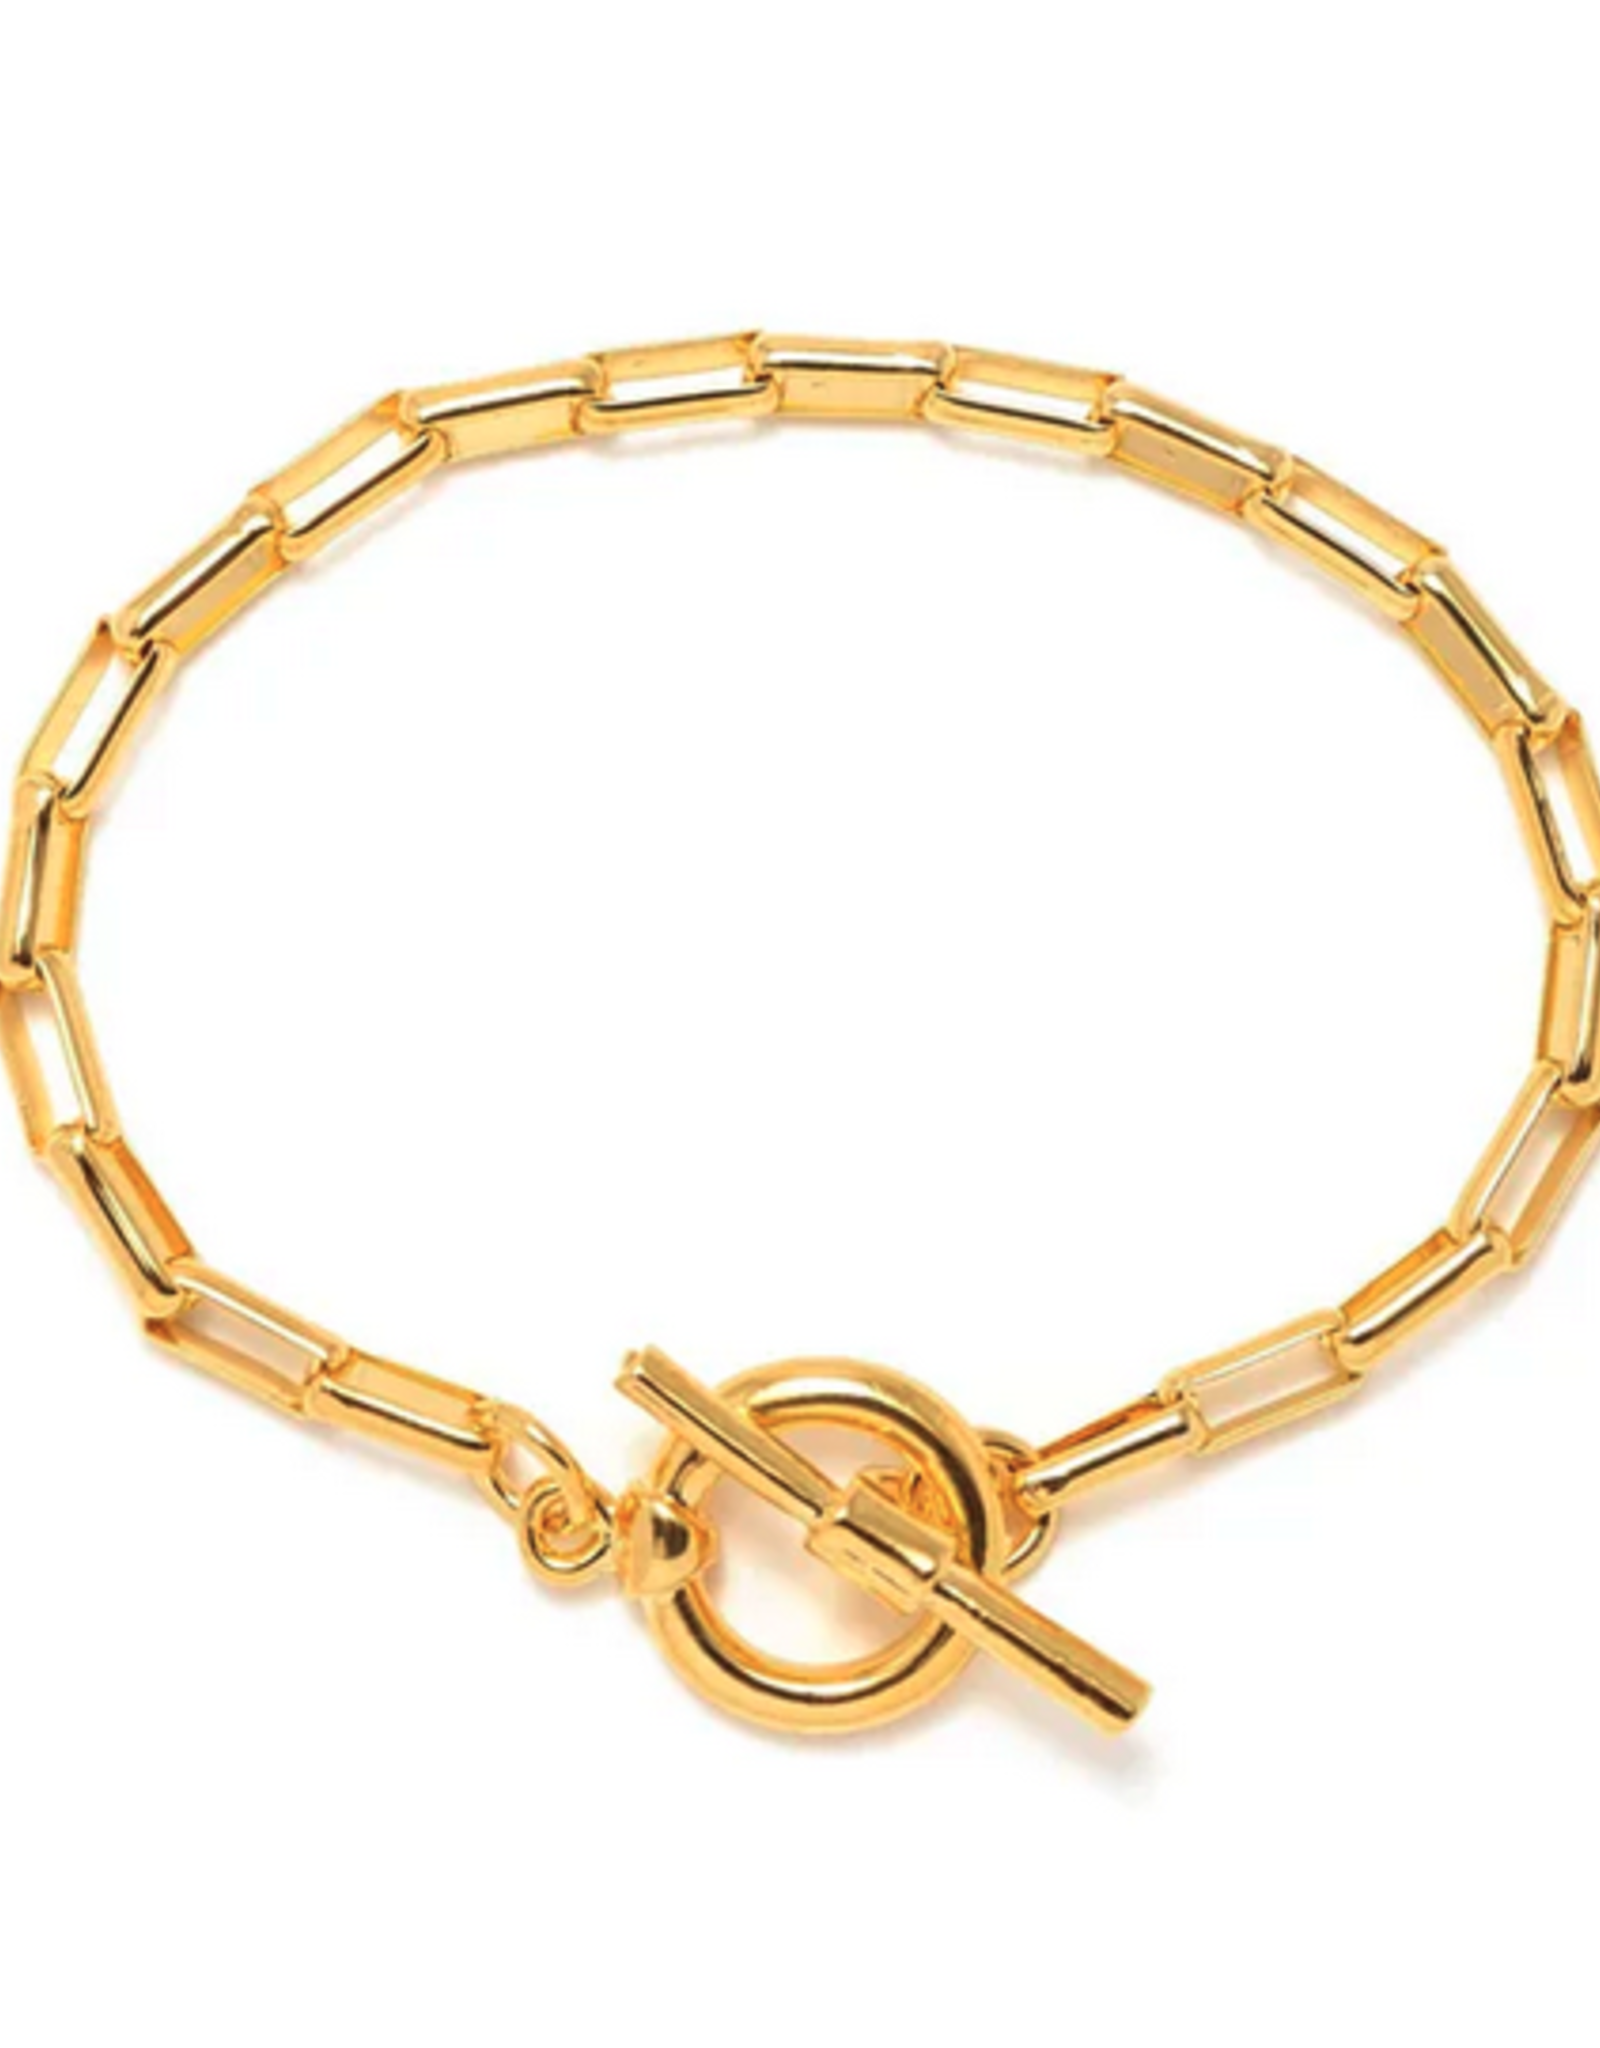 7" Staple Chain Toggle Bracelet - Gold